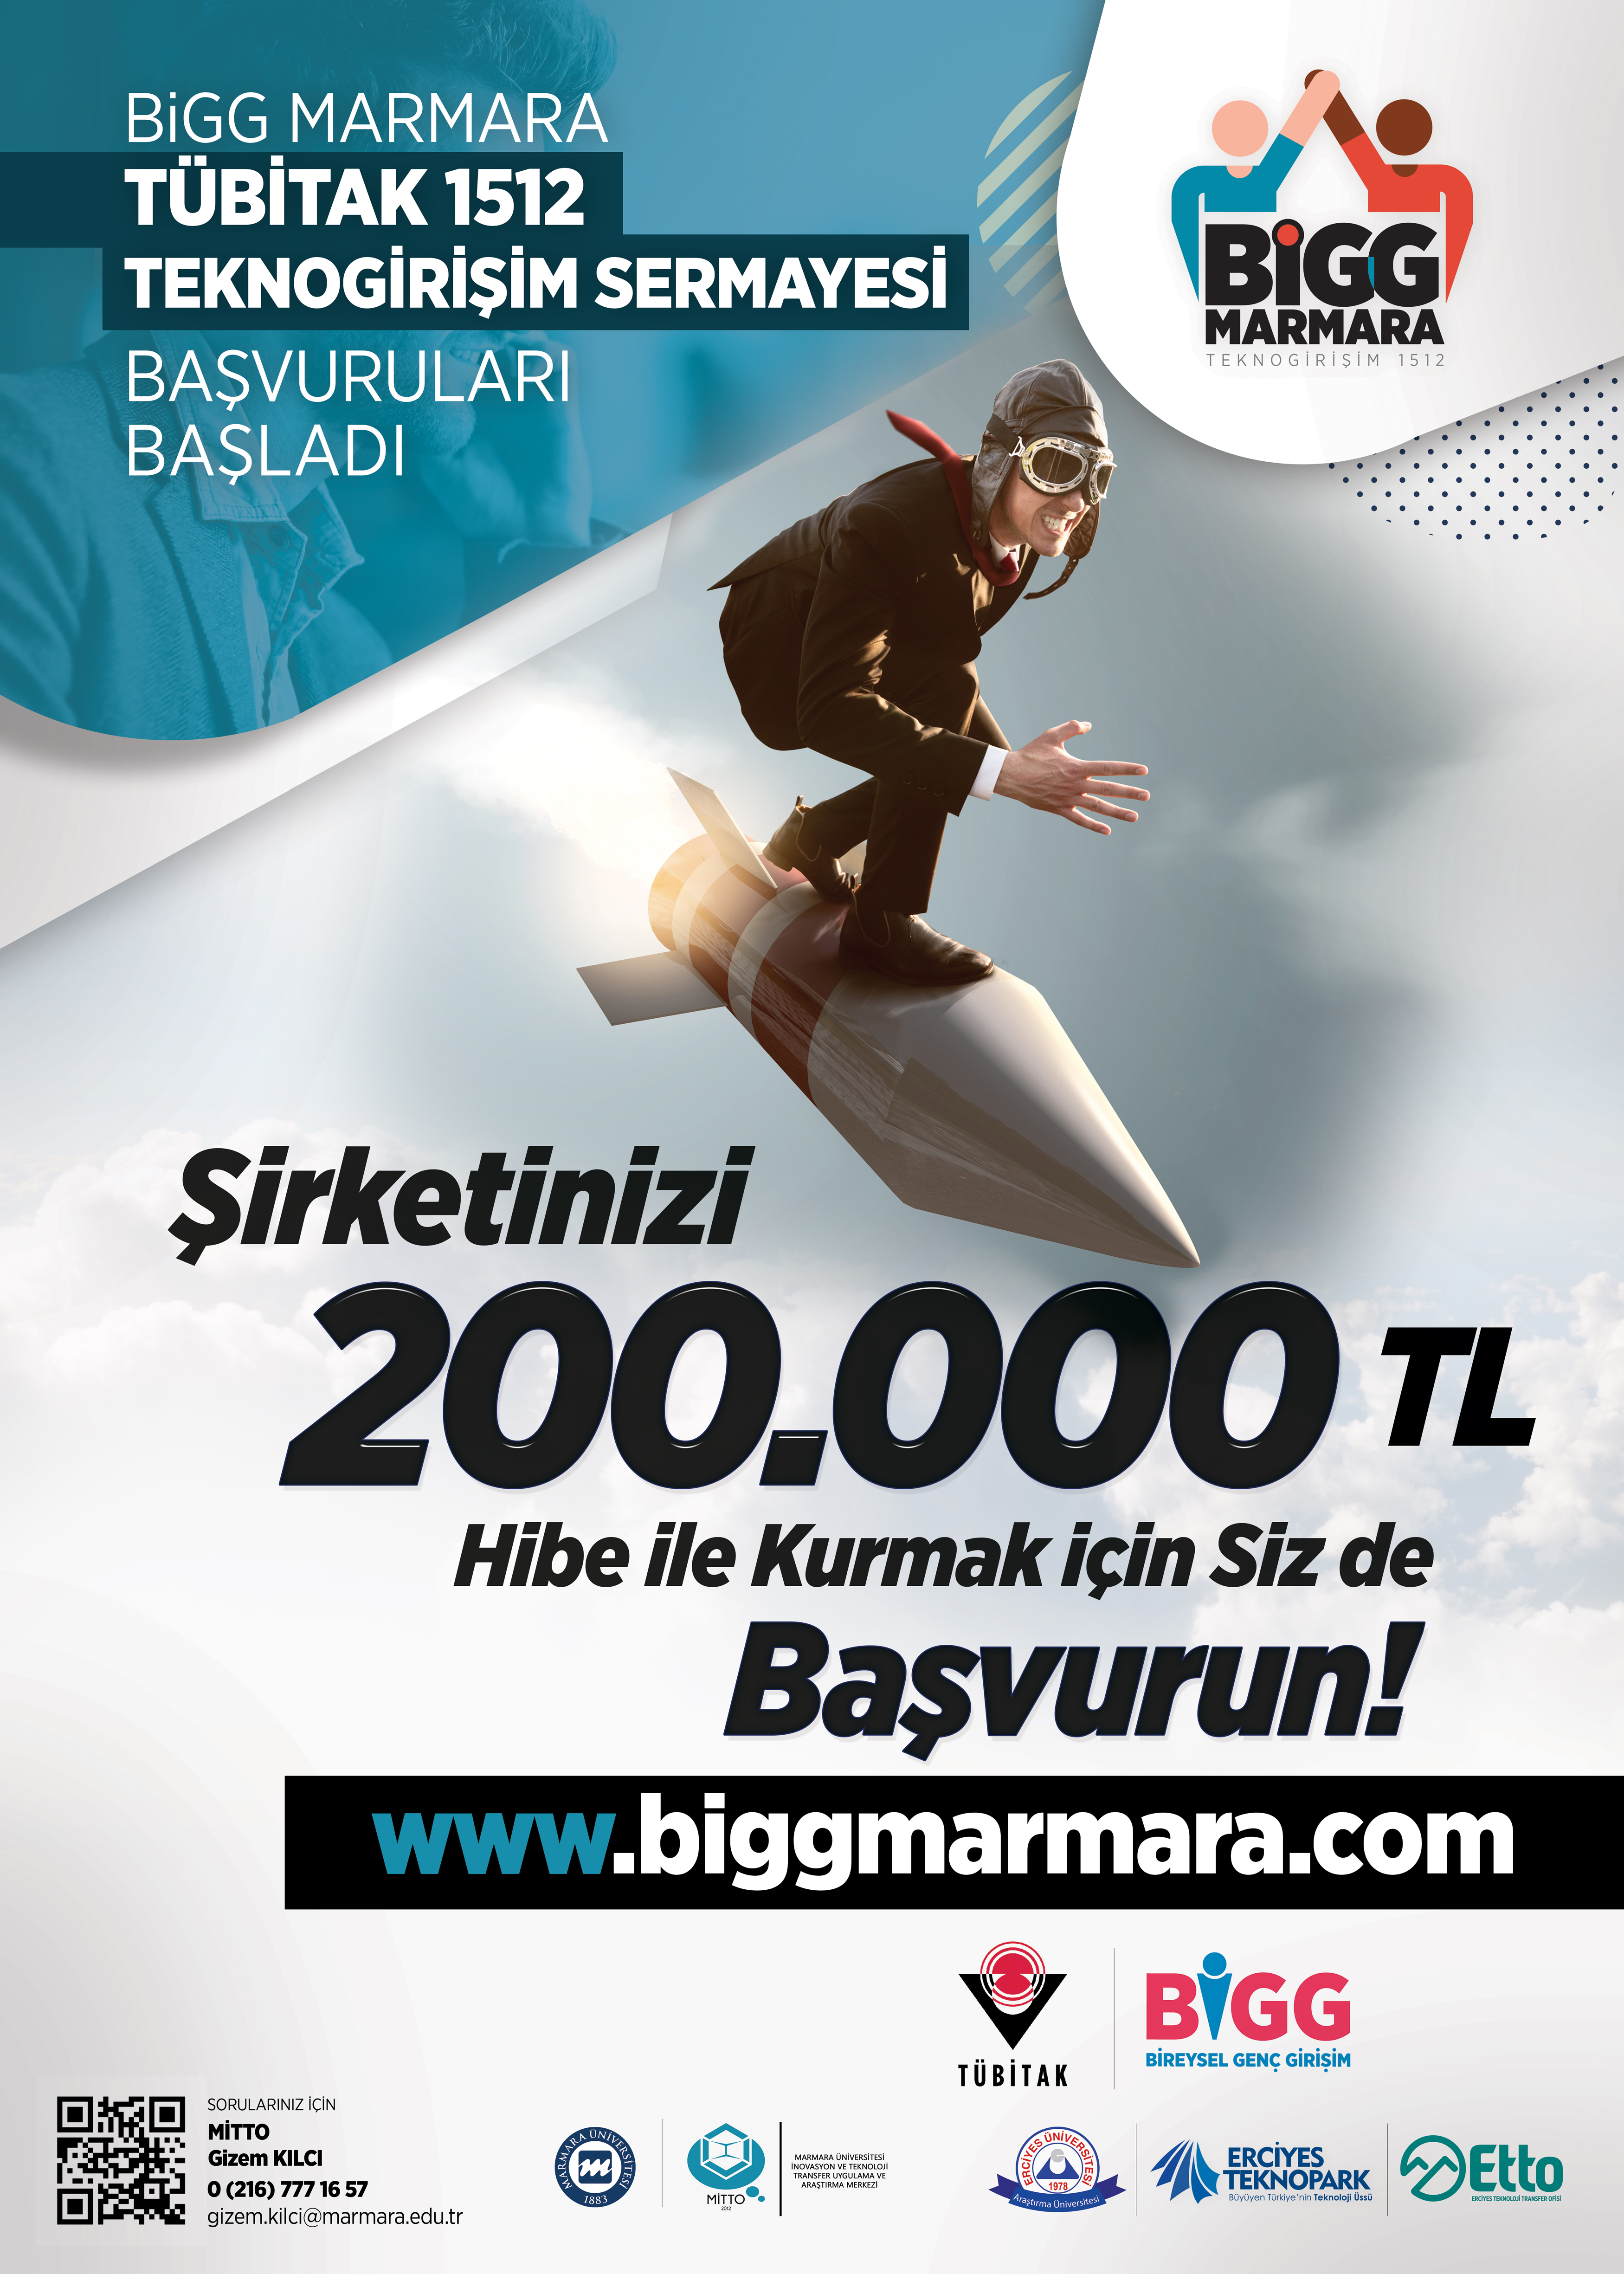 BİGG Marmara Afiş.jpg (4.33 MB)